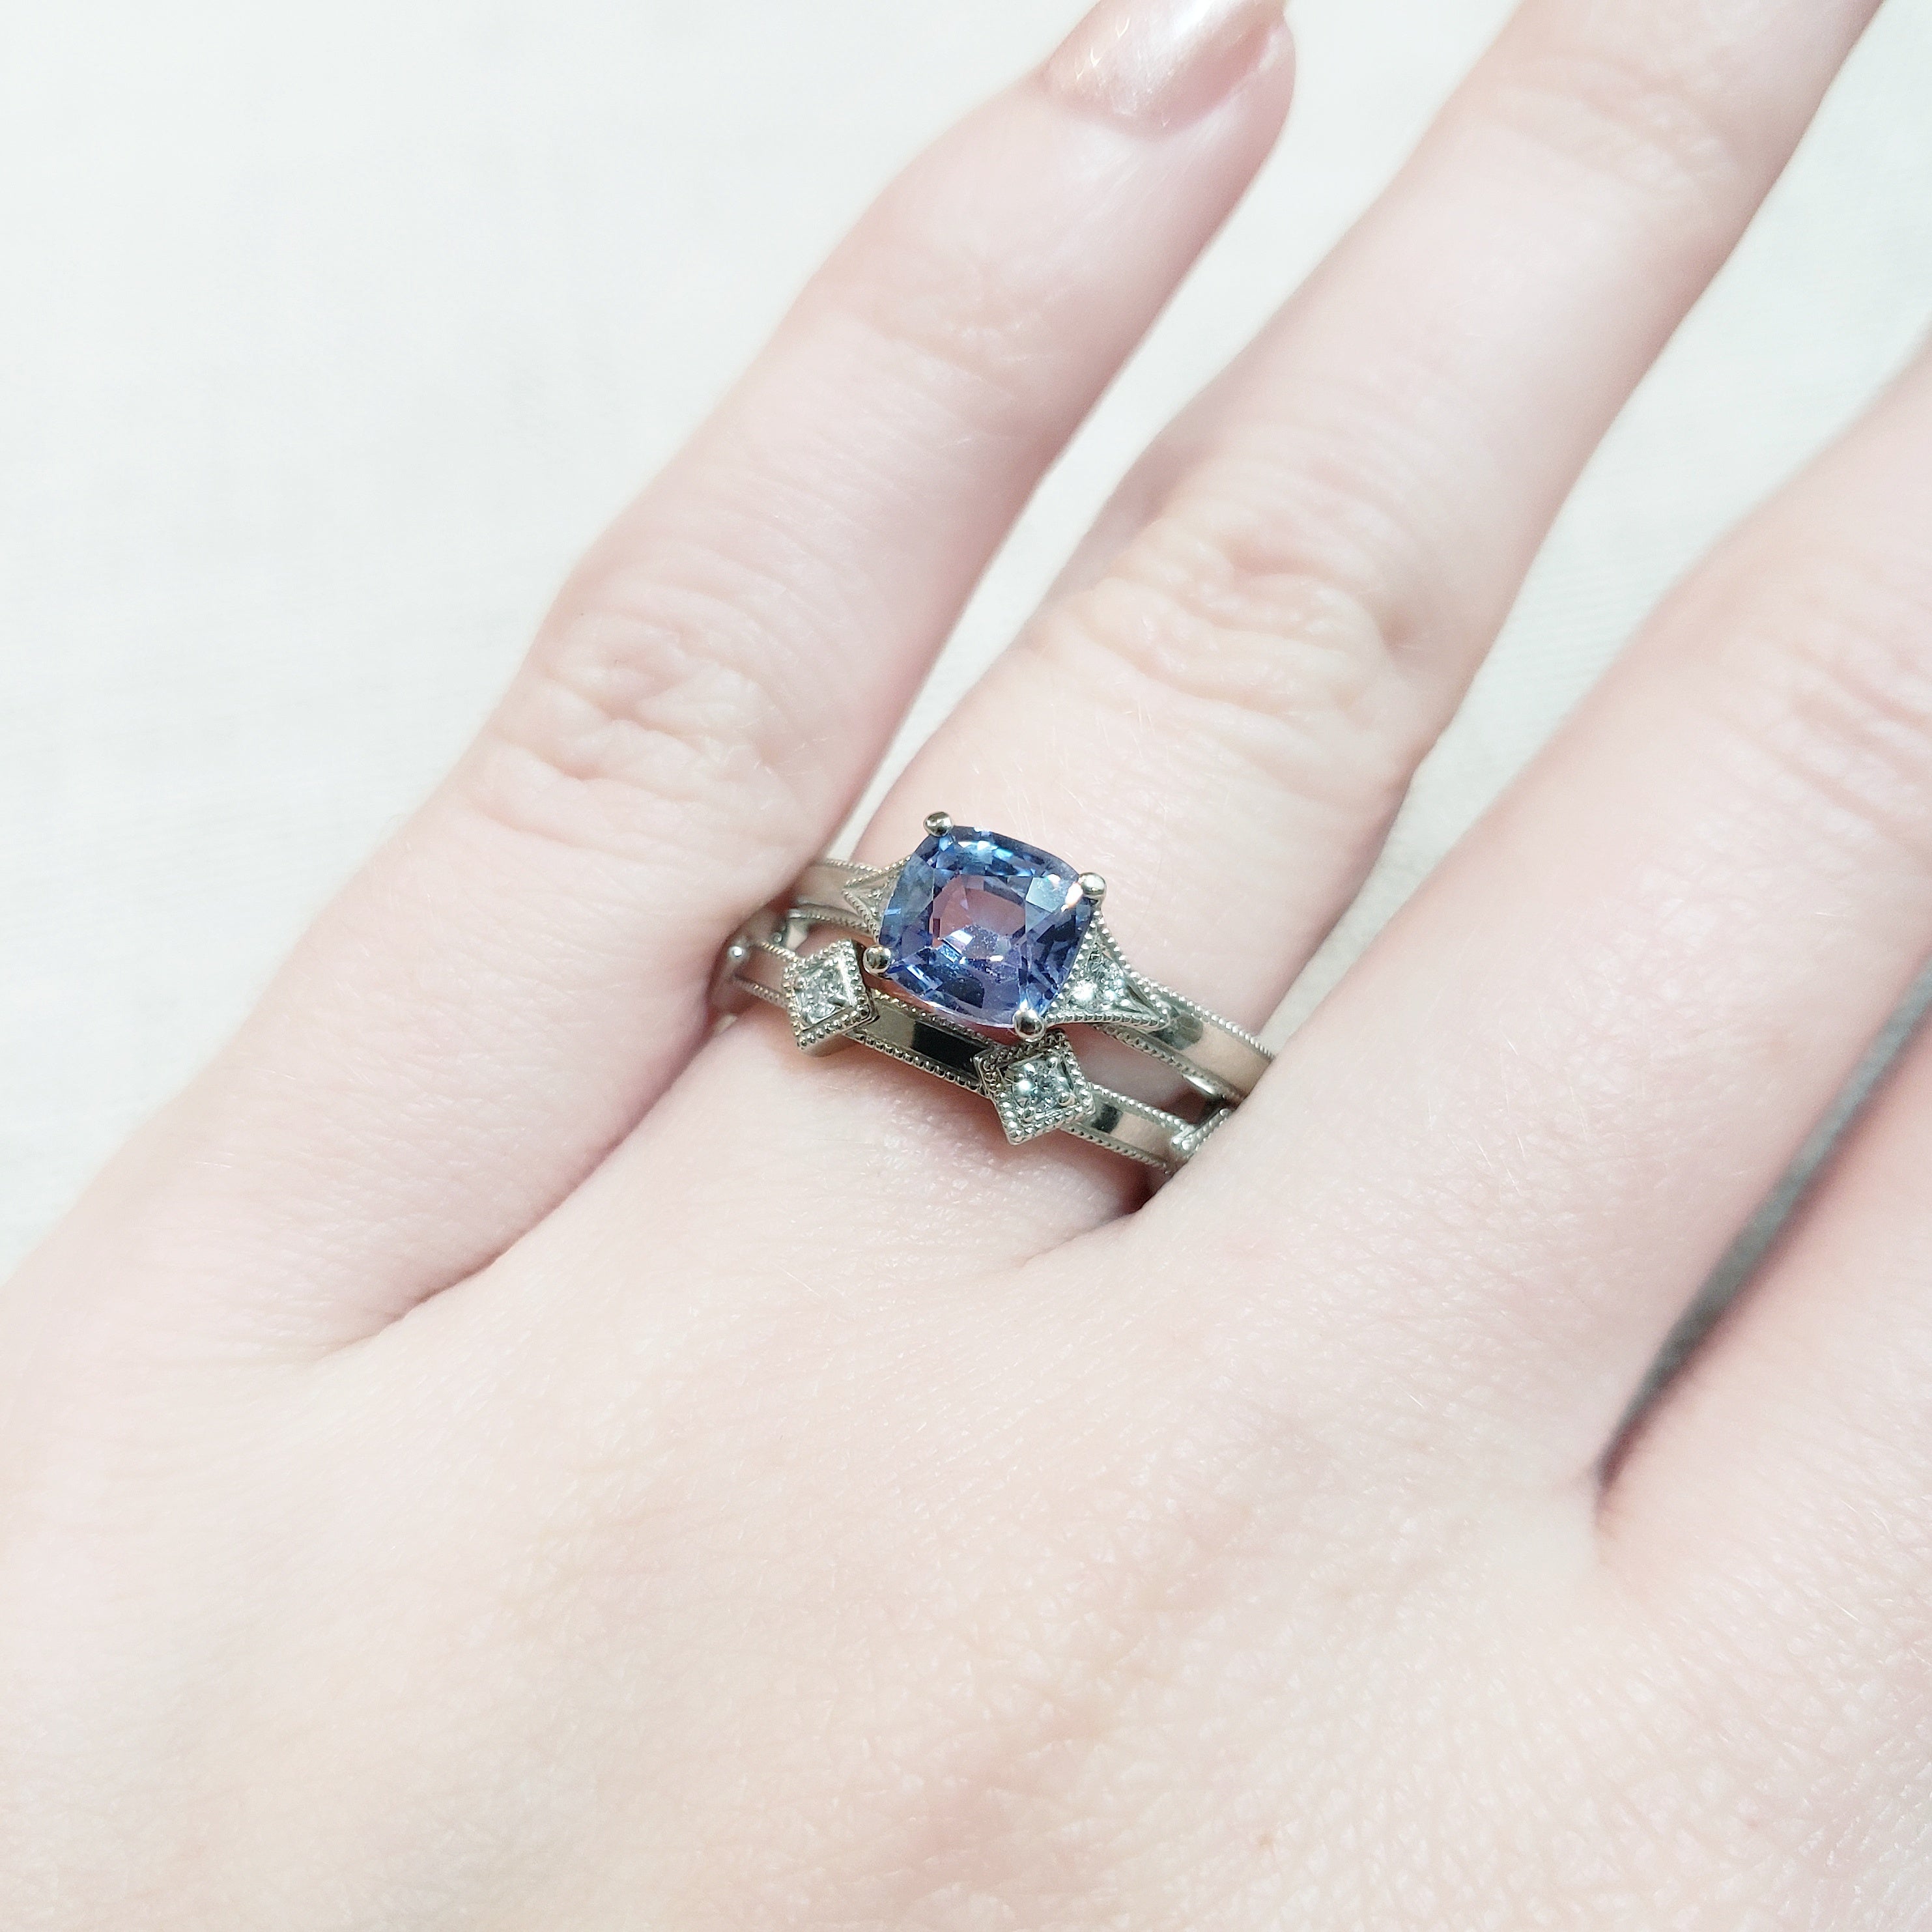 Diamond Wedding Ring | Era Design Vancouver Canada